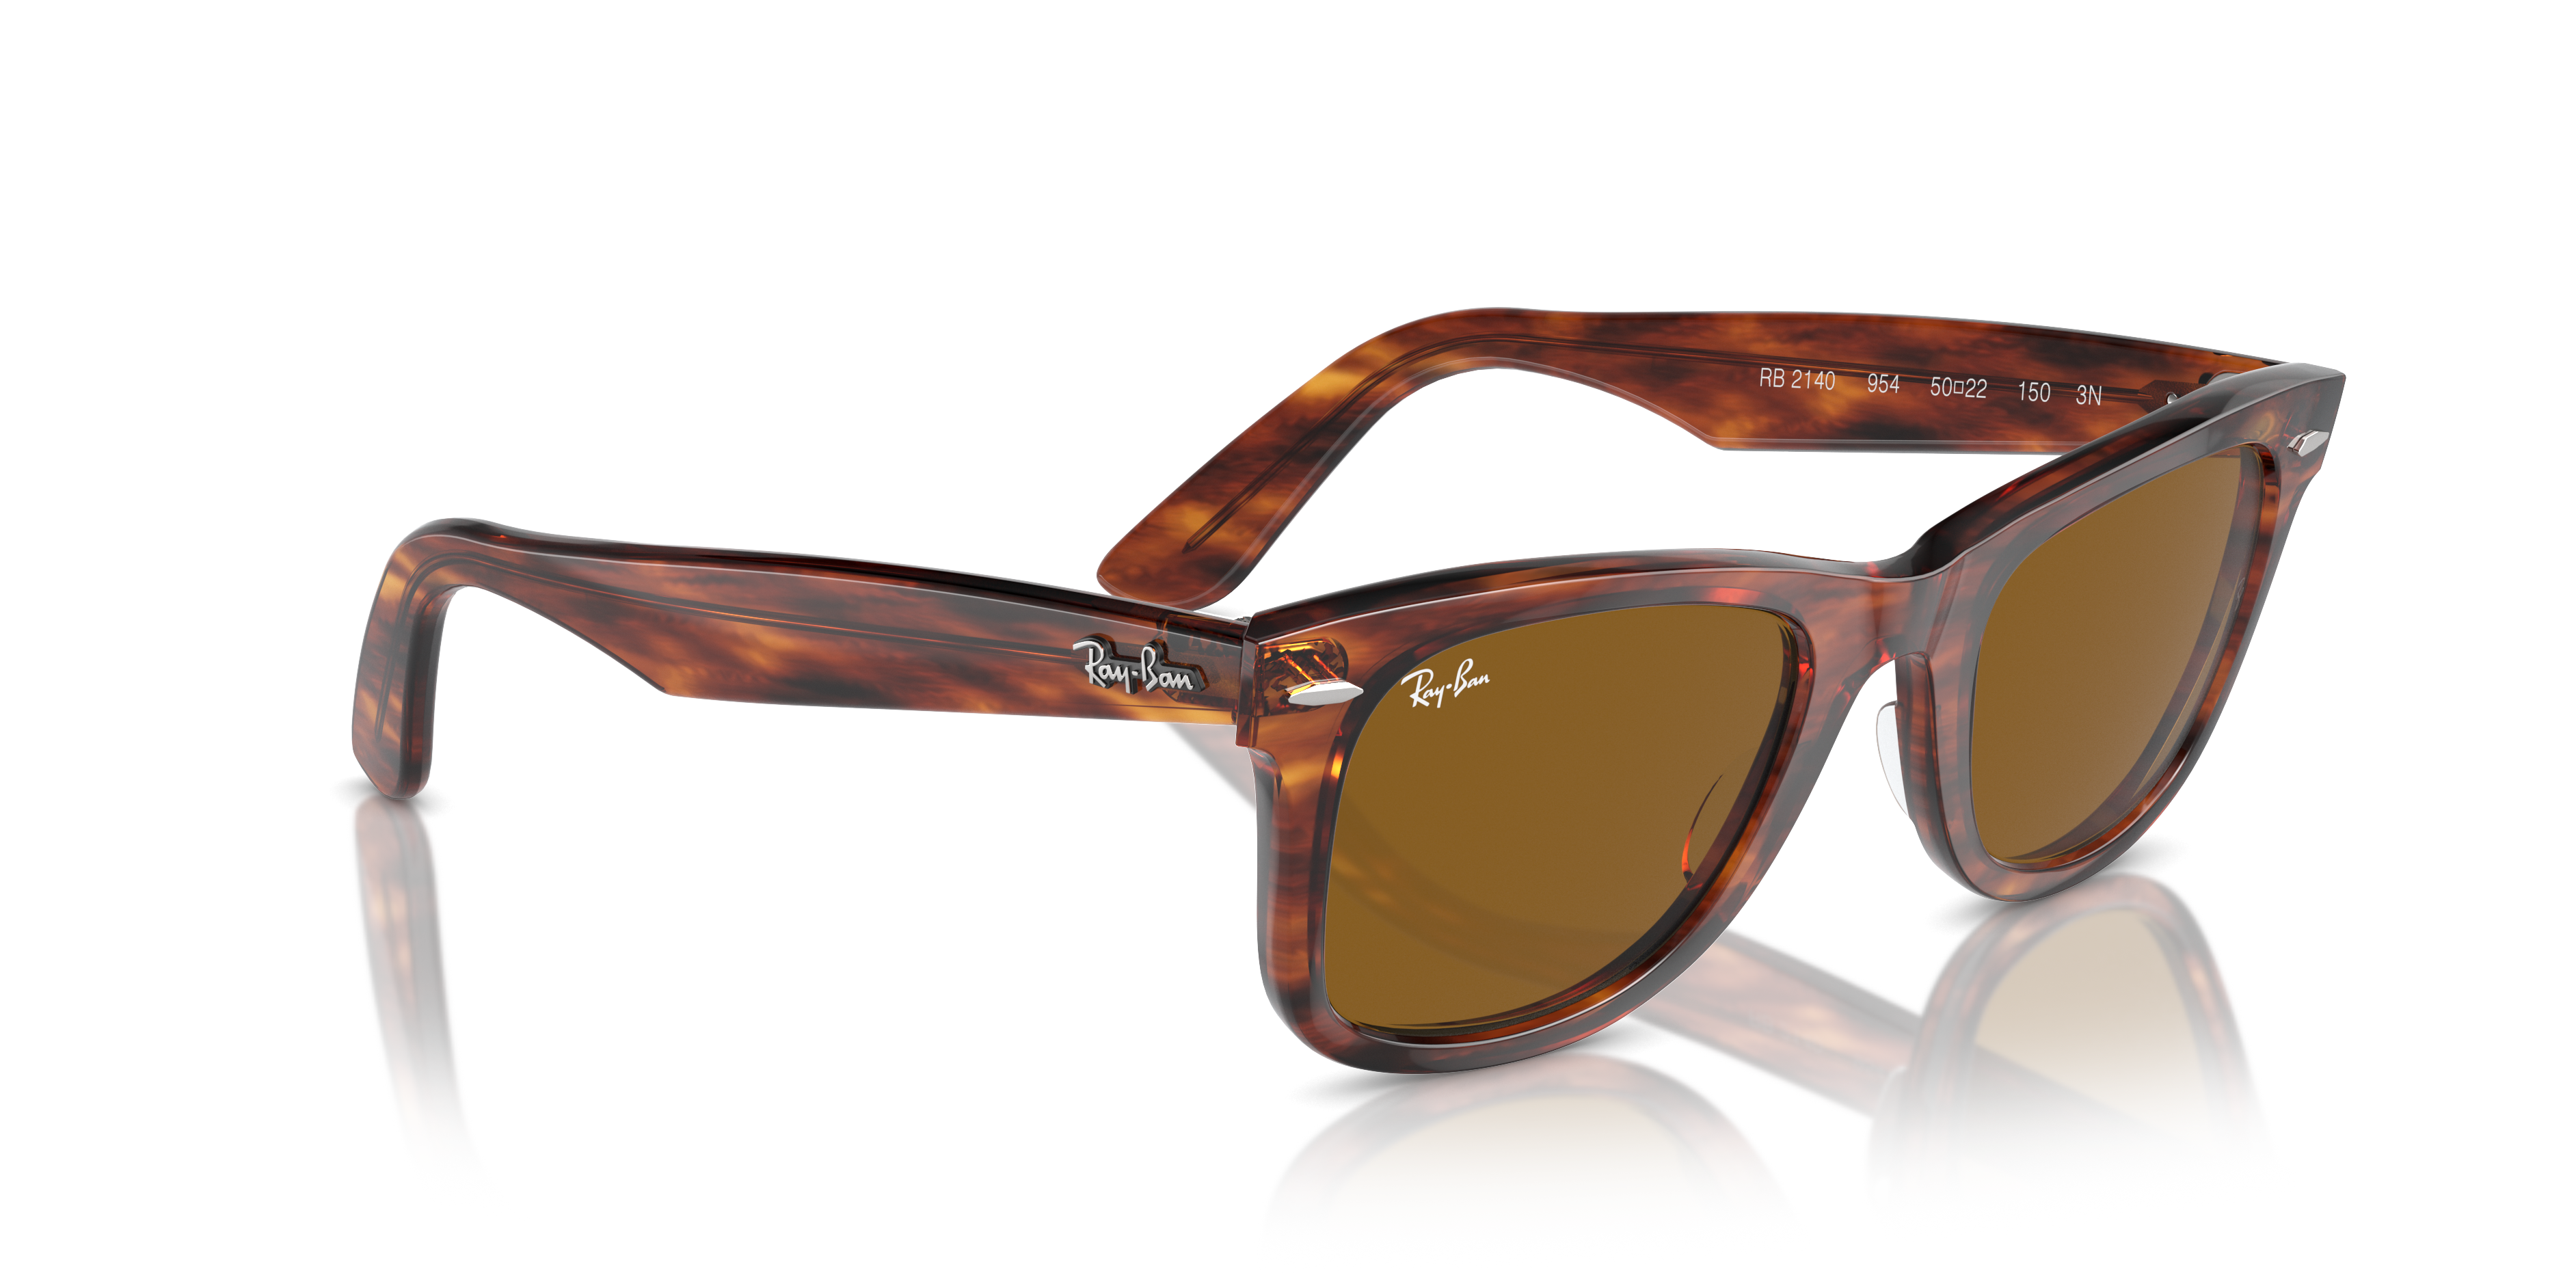 Ray-Ban Ray-Ban Wayfarer RB2140 Men's Square Sunglasses Brown 